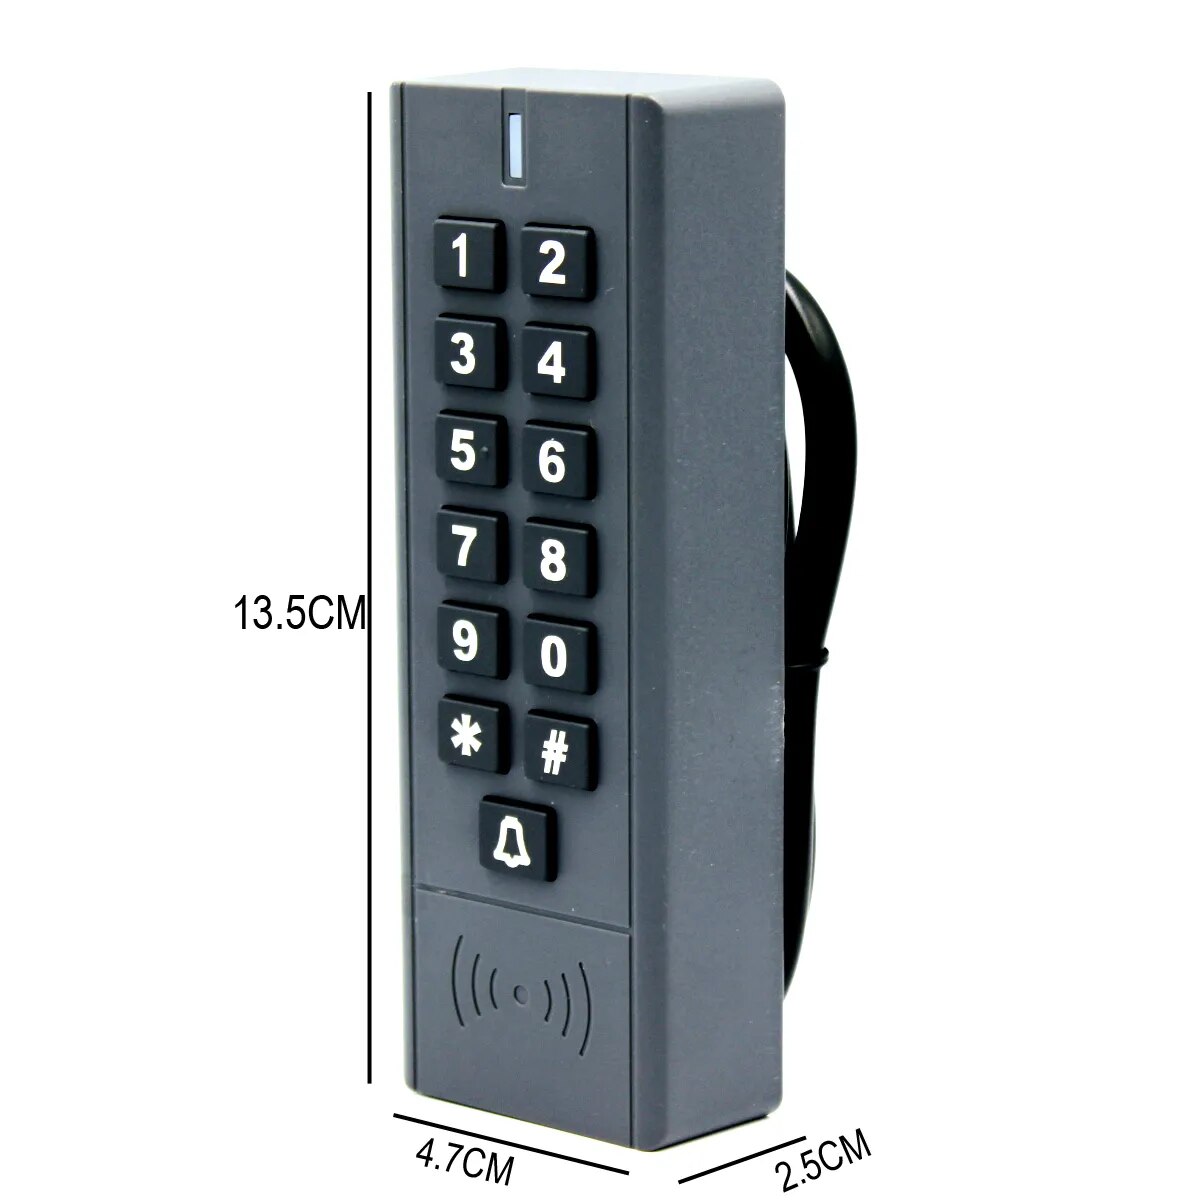 A9-S-EM 1000 User IP67 Waterproof Access Control Keypad Outdoor RFID Access Controller Door Opener System EM4100 125KHz Key Card